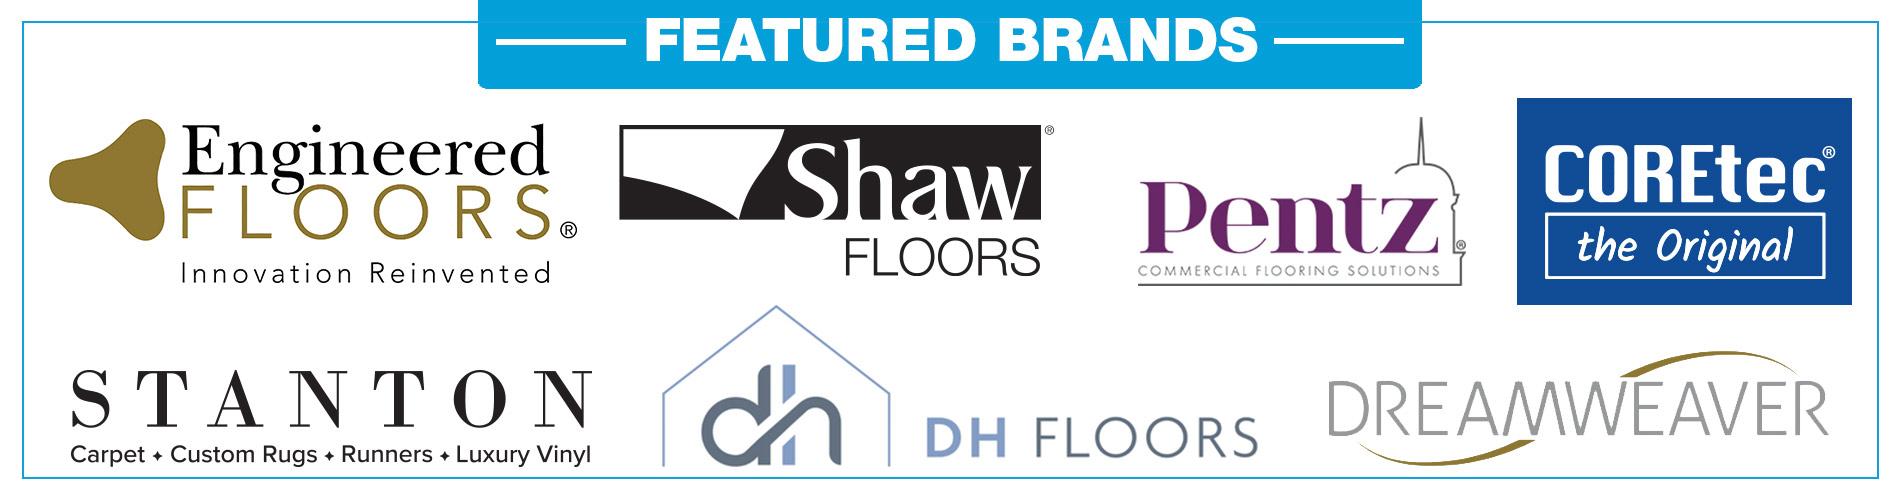 Featured Brands - Engineered Floors, Shaw Floors, Pentz, COREtec, Stanton, DH Floors, Dreamweaver